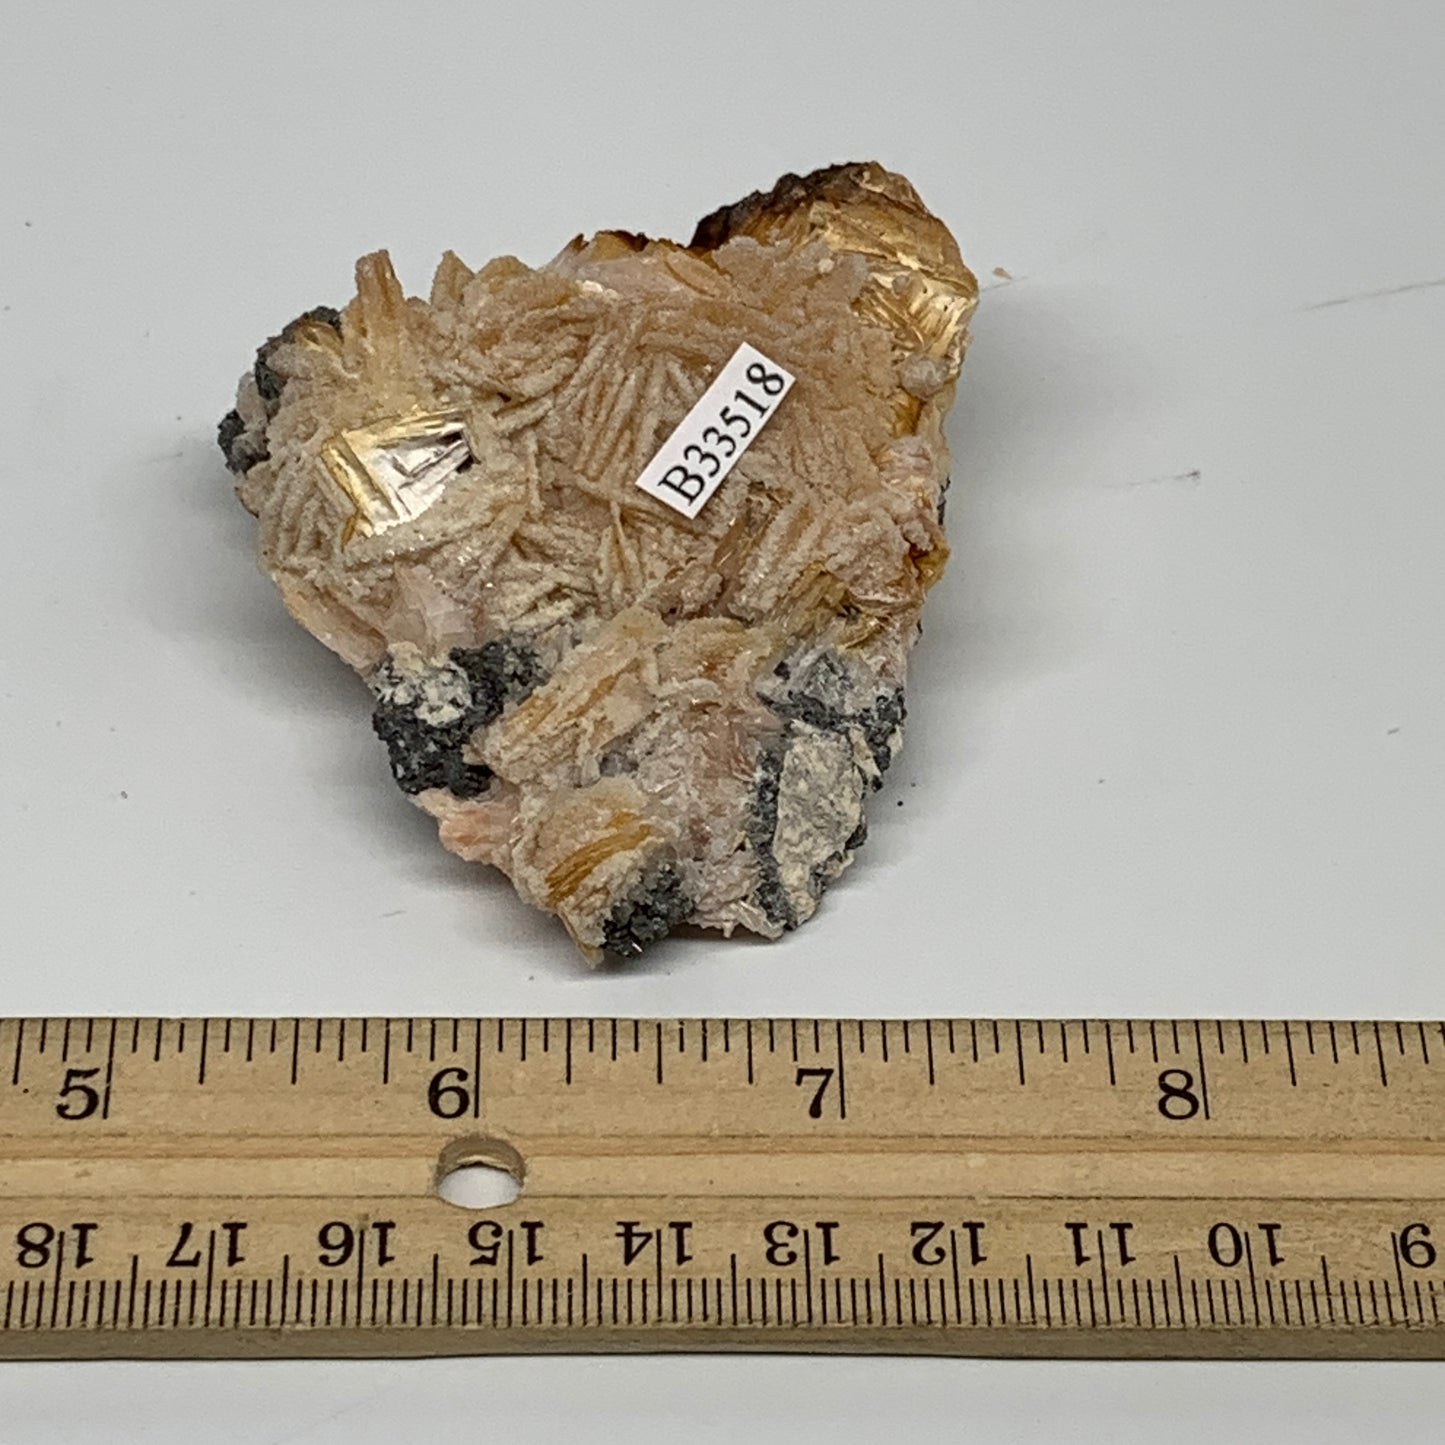 126.3g, 2.3"x2.3"x1.2", Barite with Cerussite on Galena Mineral Specimen, B33518